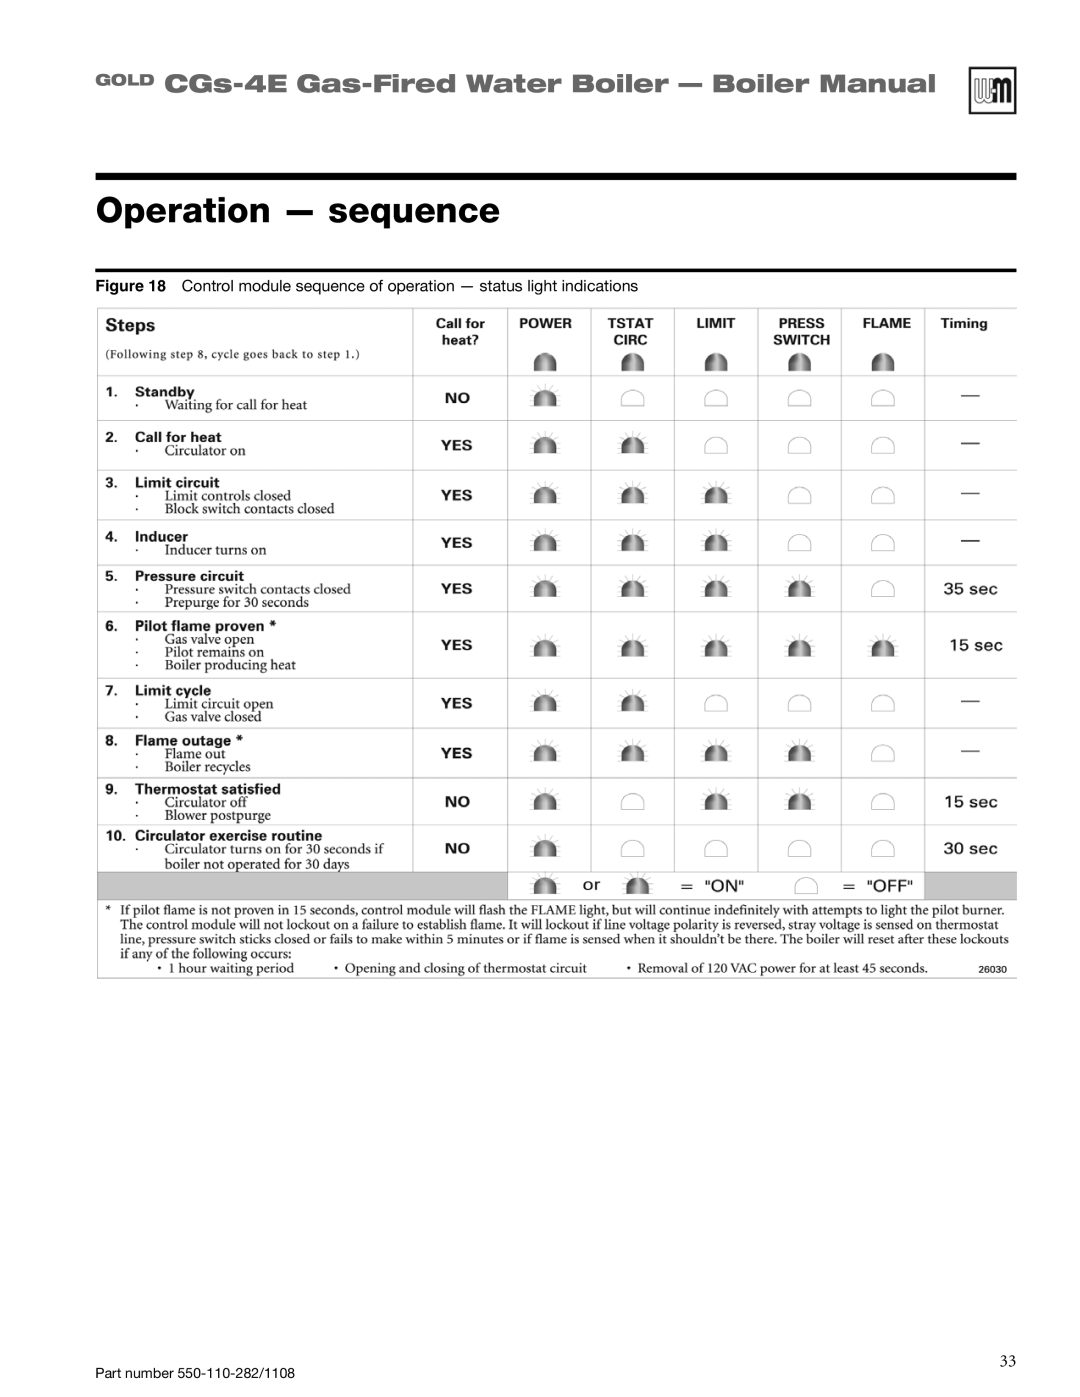 Weil-McLain CGS-4E Operation - sequence, GOLD CGs-4E Gas-FiredWater Boiler - Boiler Manual, Part number 550-110-282/1108 